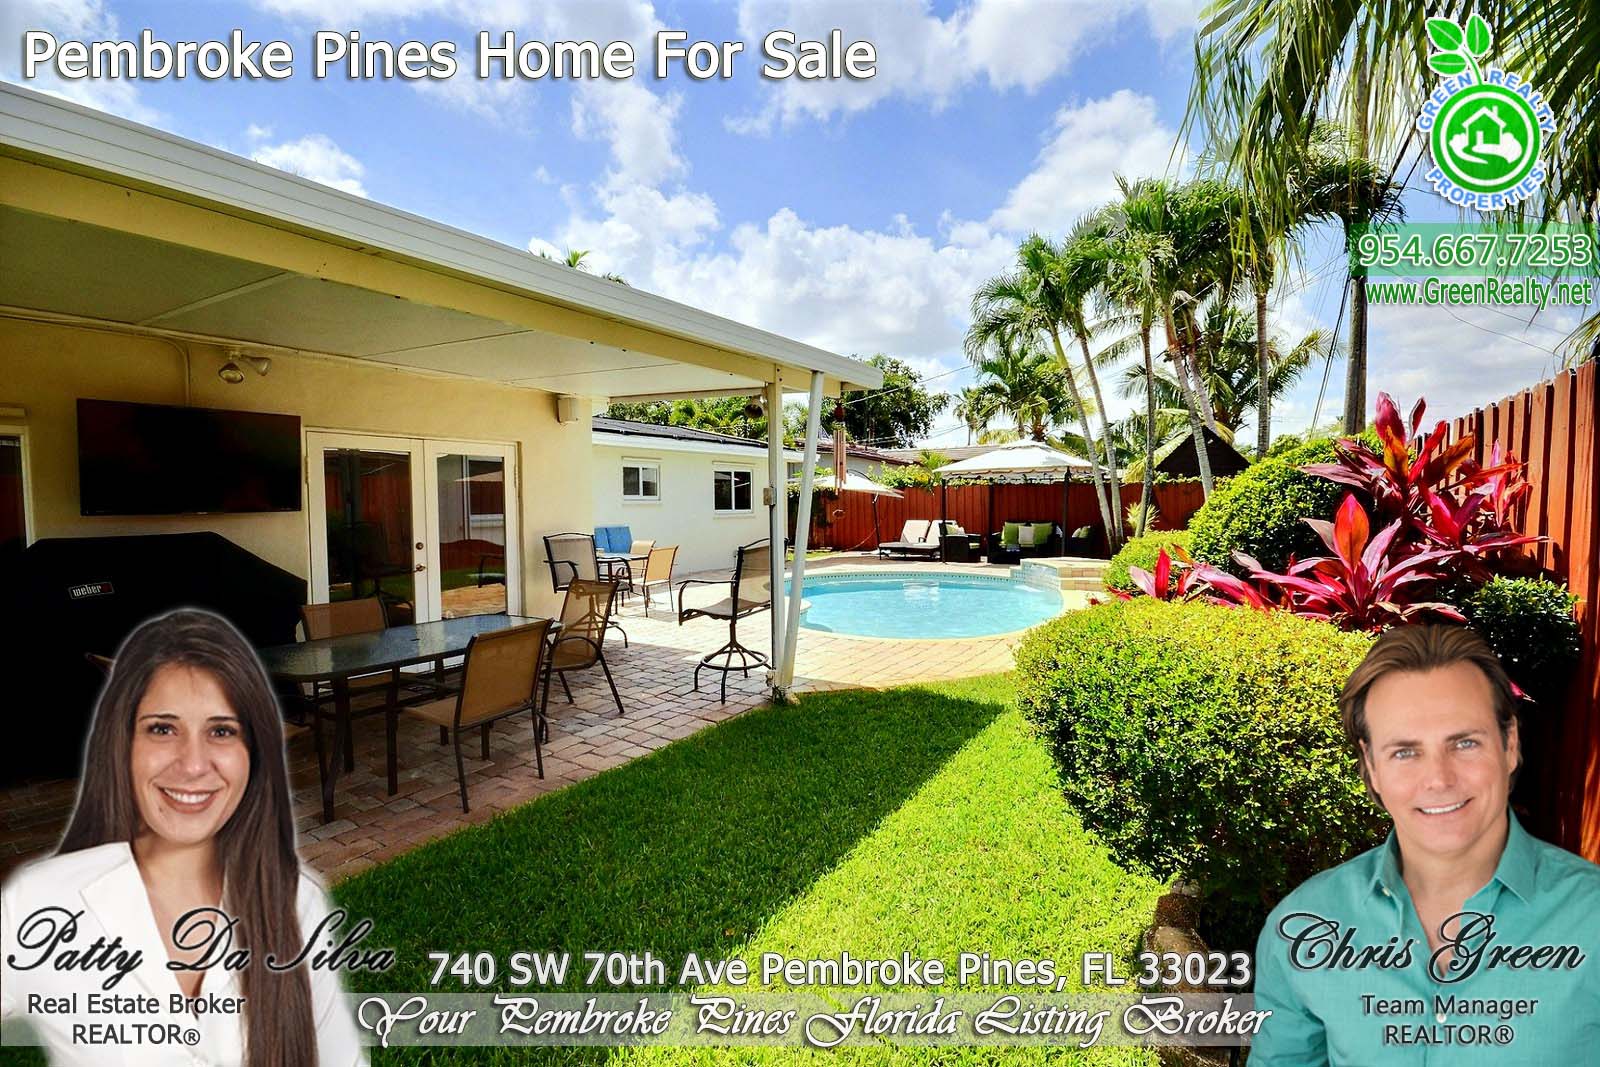 30 Pembroke Pines Real Estate For Sale (5)